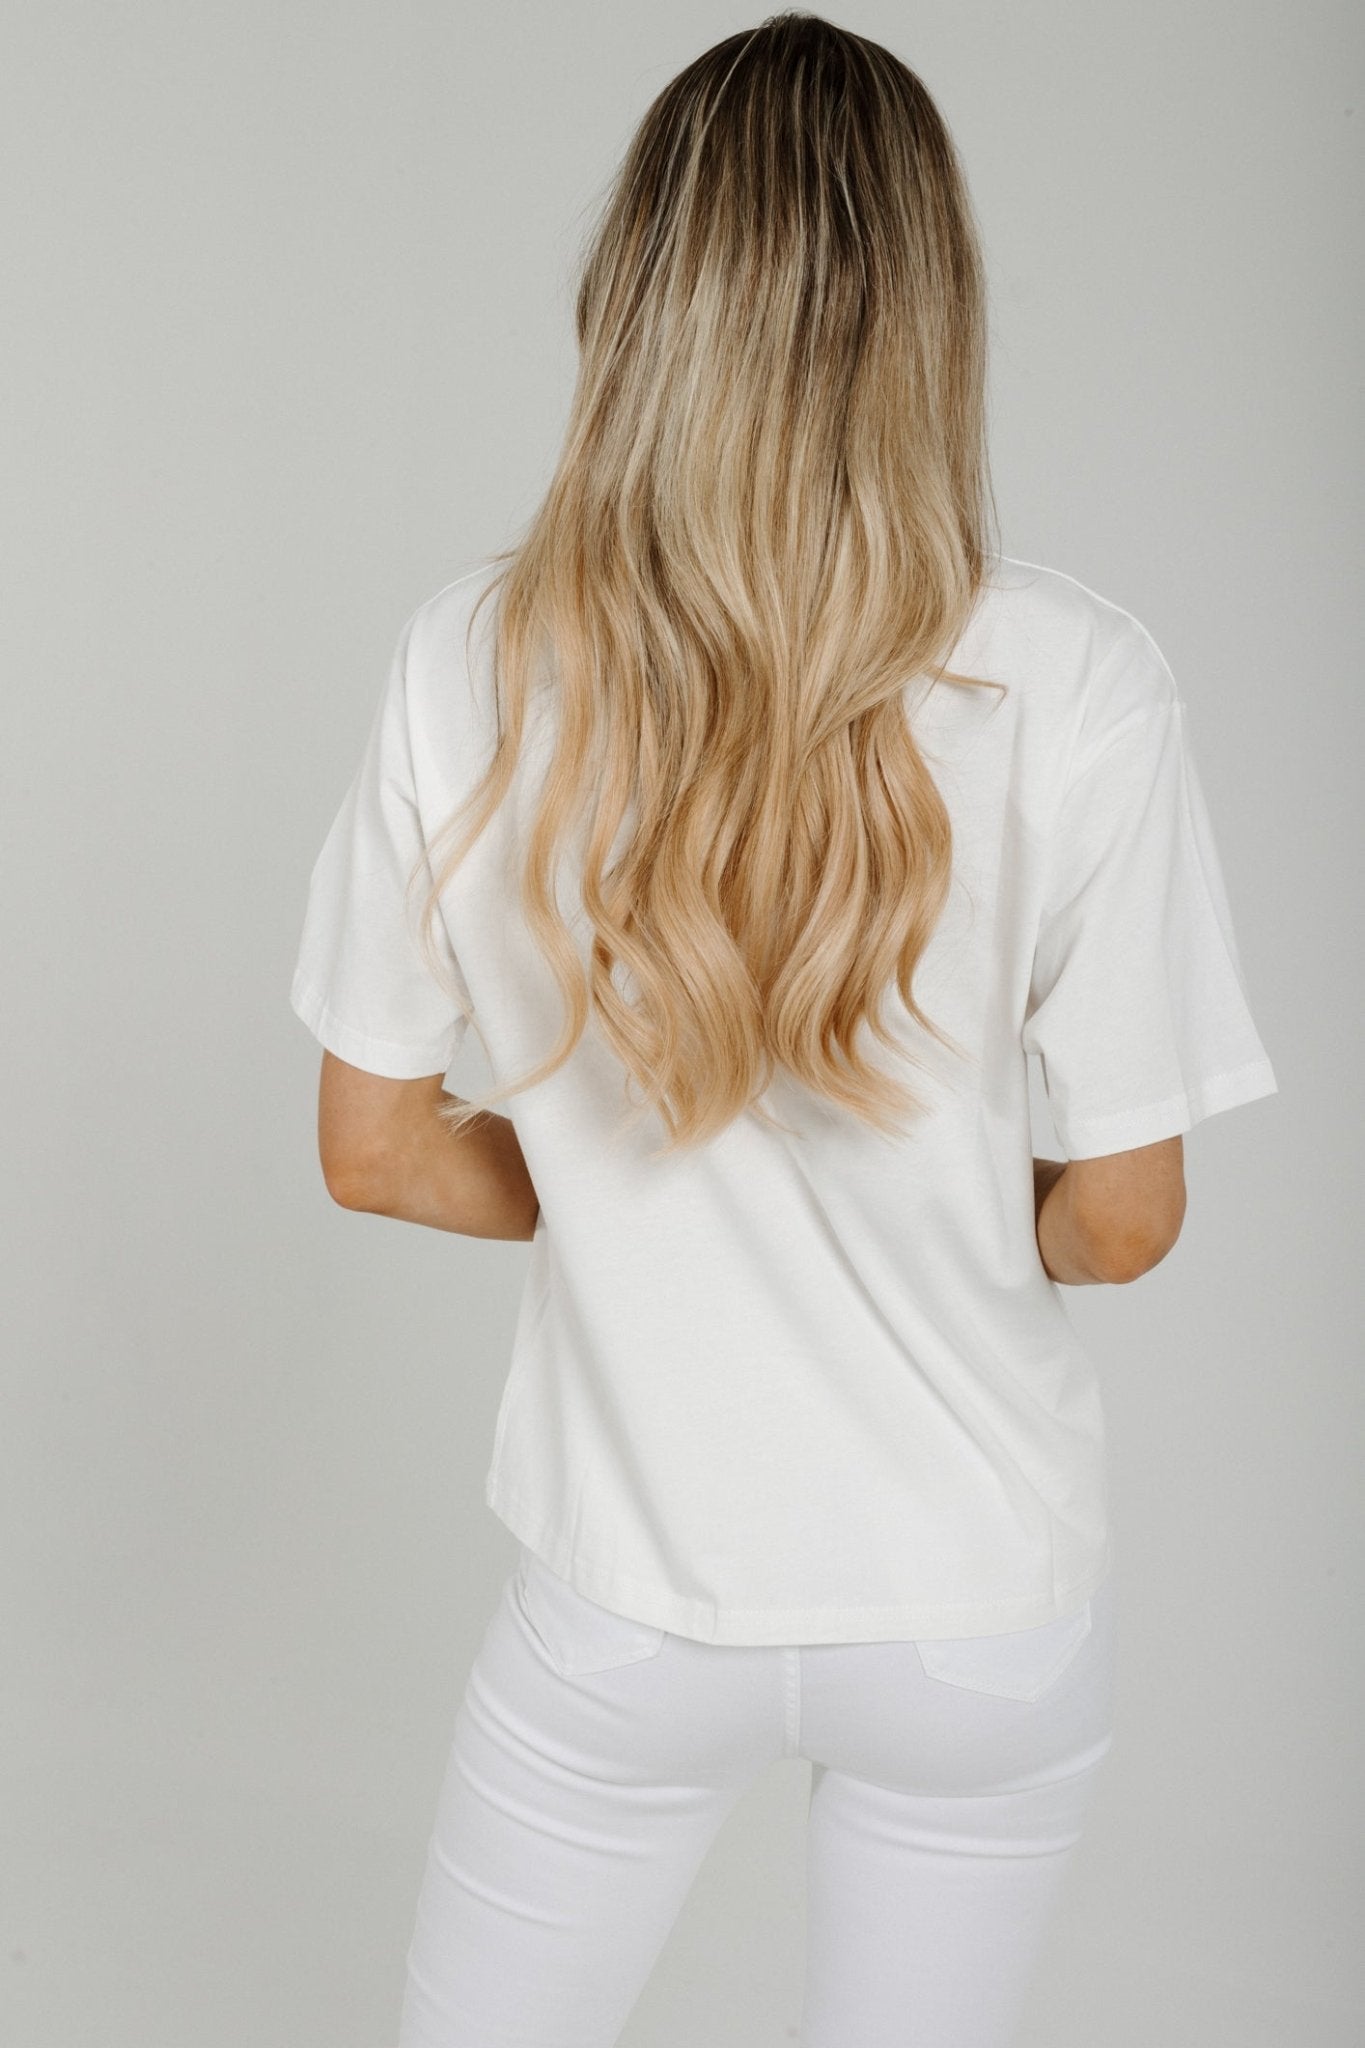 Jane Floral T-Shirt In White - The Walk in Wardrobe